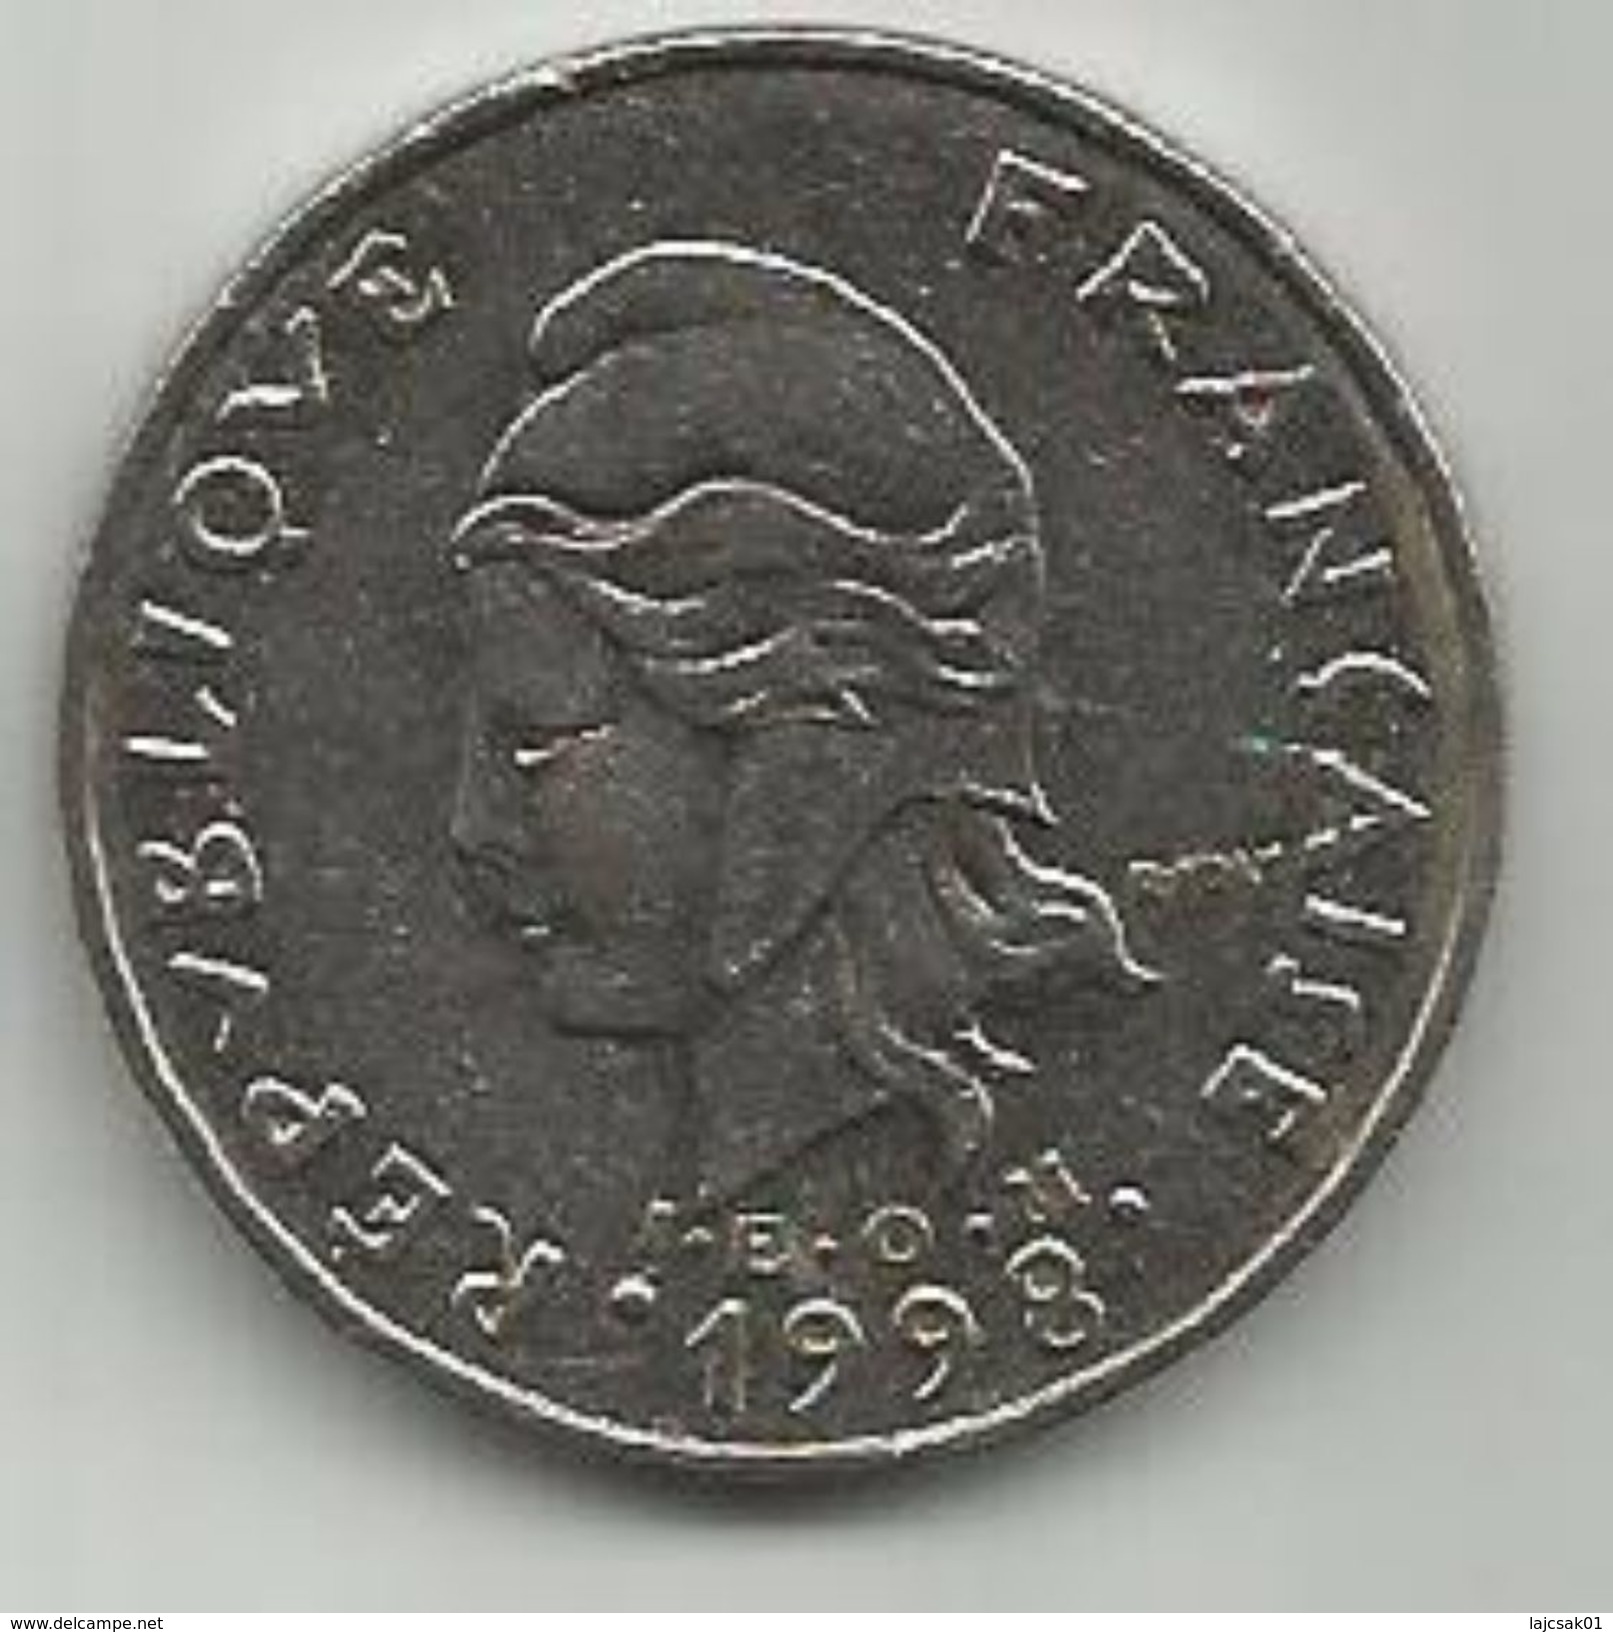 French Polynesia 20 Francs 1998. KM#9 - Polynésie Française